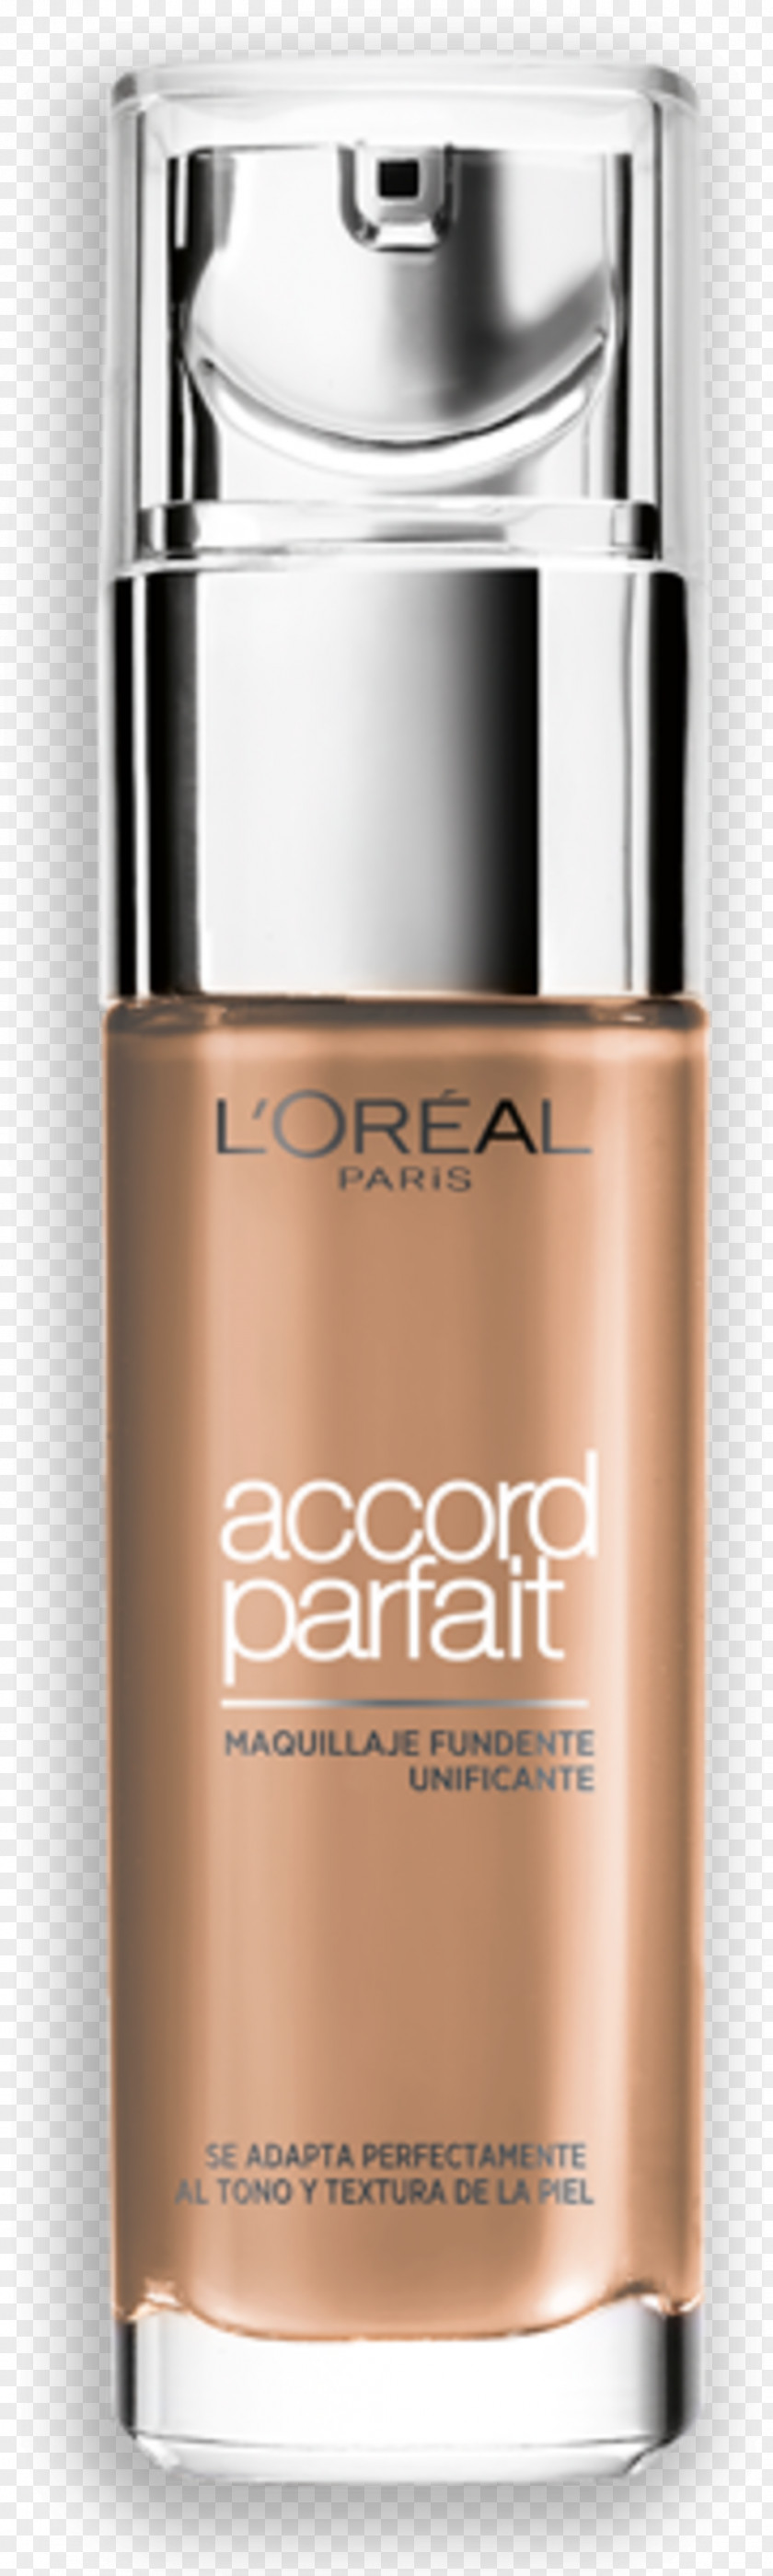 Lorel L'Oréal True Match Foundation Make-up Cosmetics Accord Parfait PNG